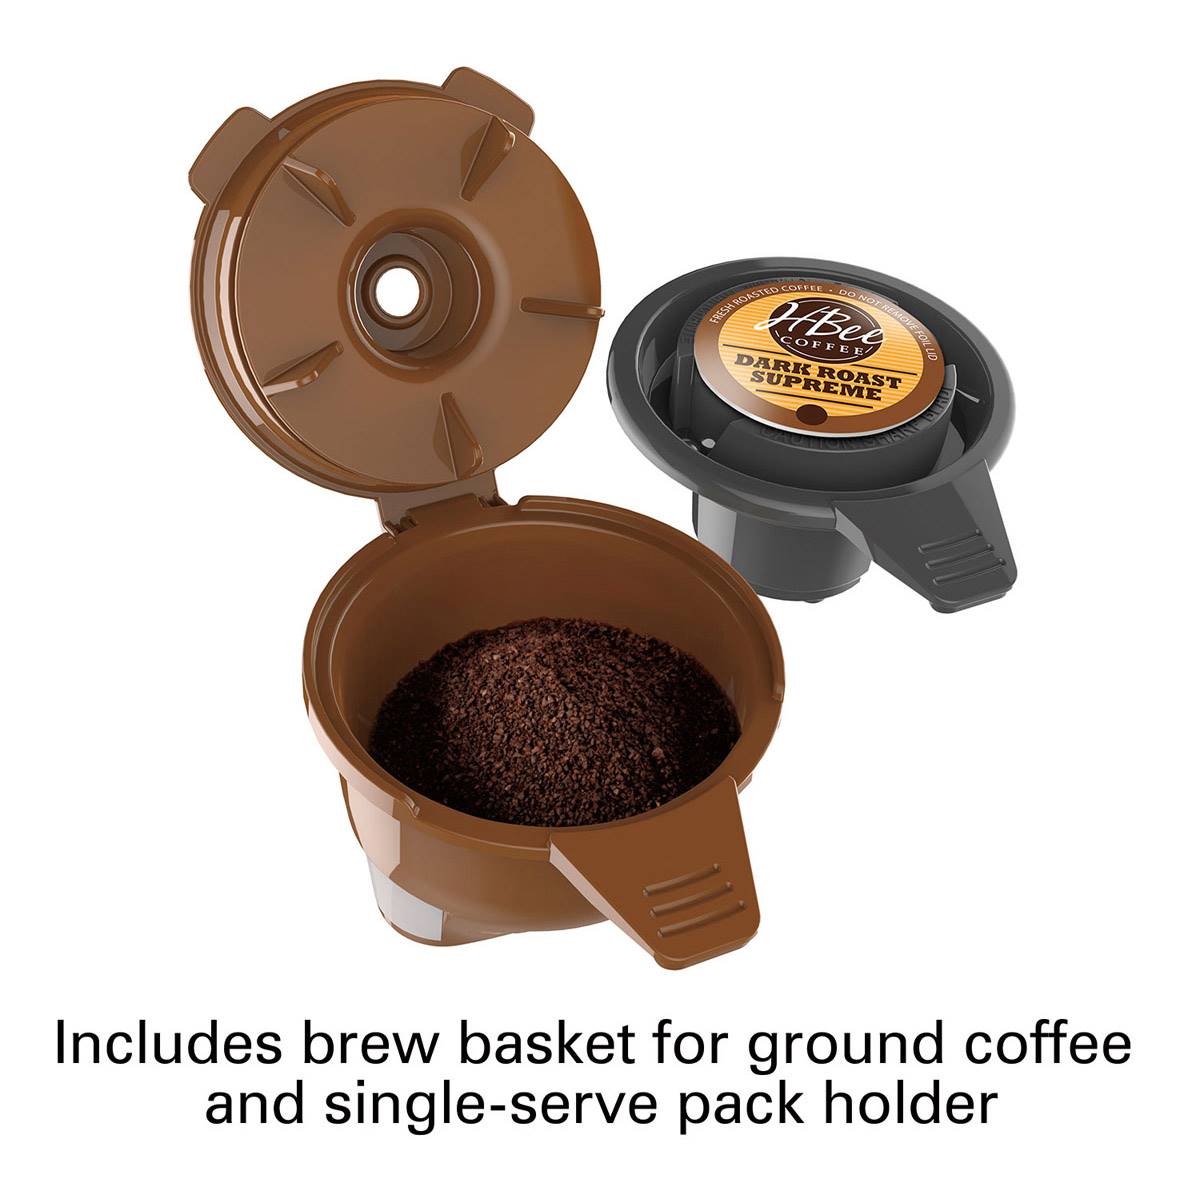 Hamilton Beach(R) FlexBrew(R) Single Serve Coffeemaker